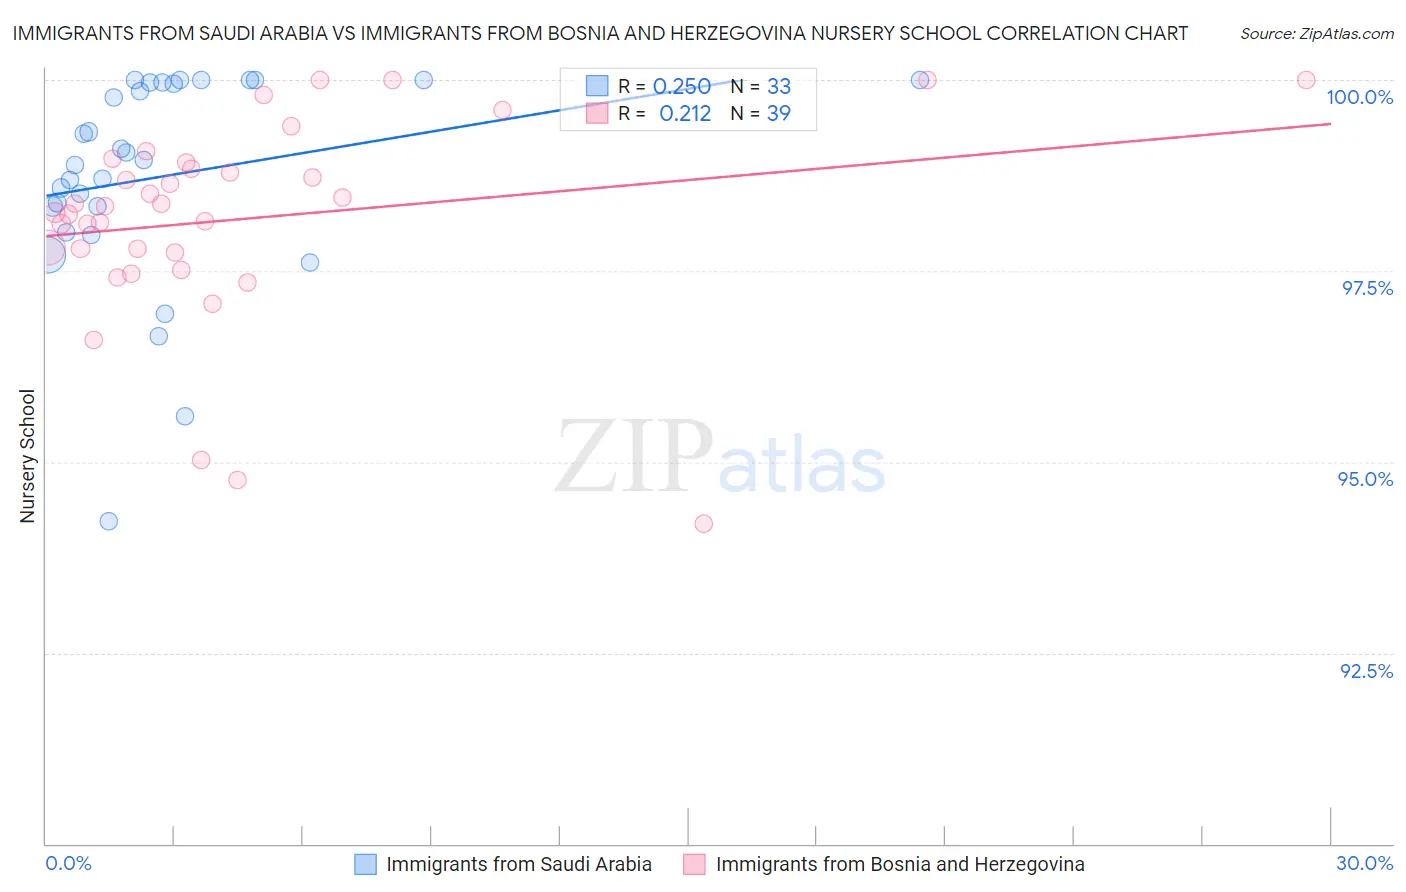 Immigrants from Saudi Arabia vs Immigrants from Bosnia and Herzegovina Nursery School